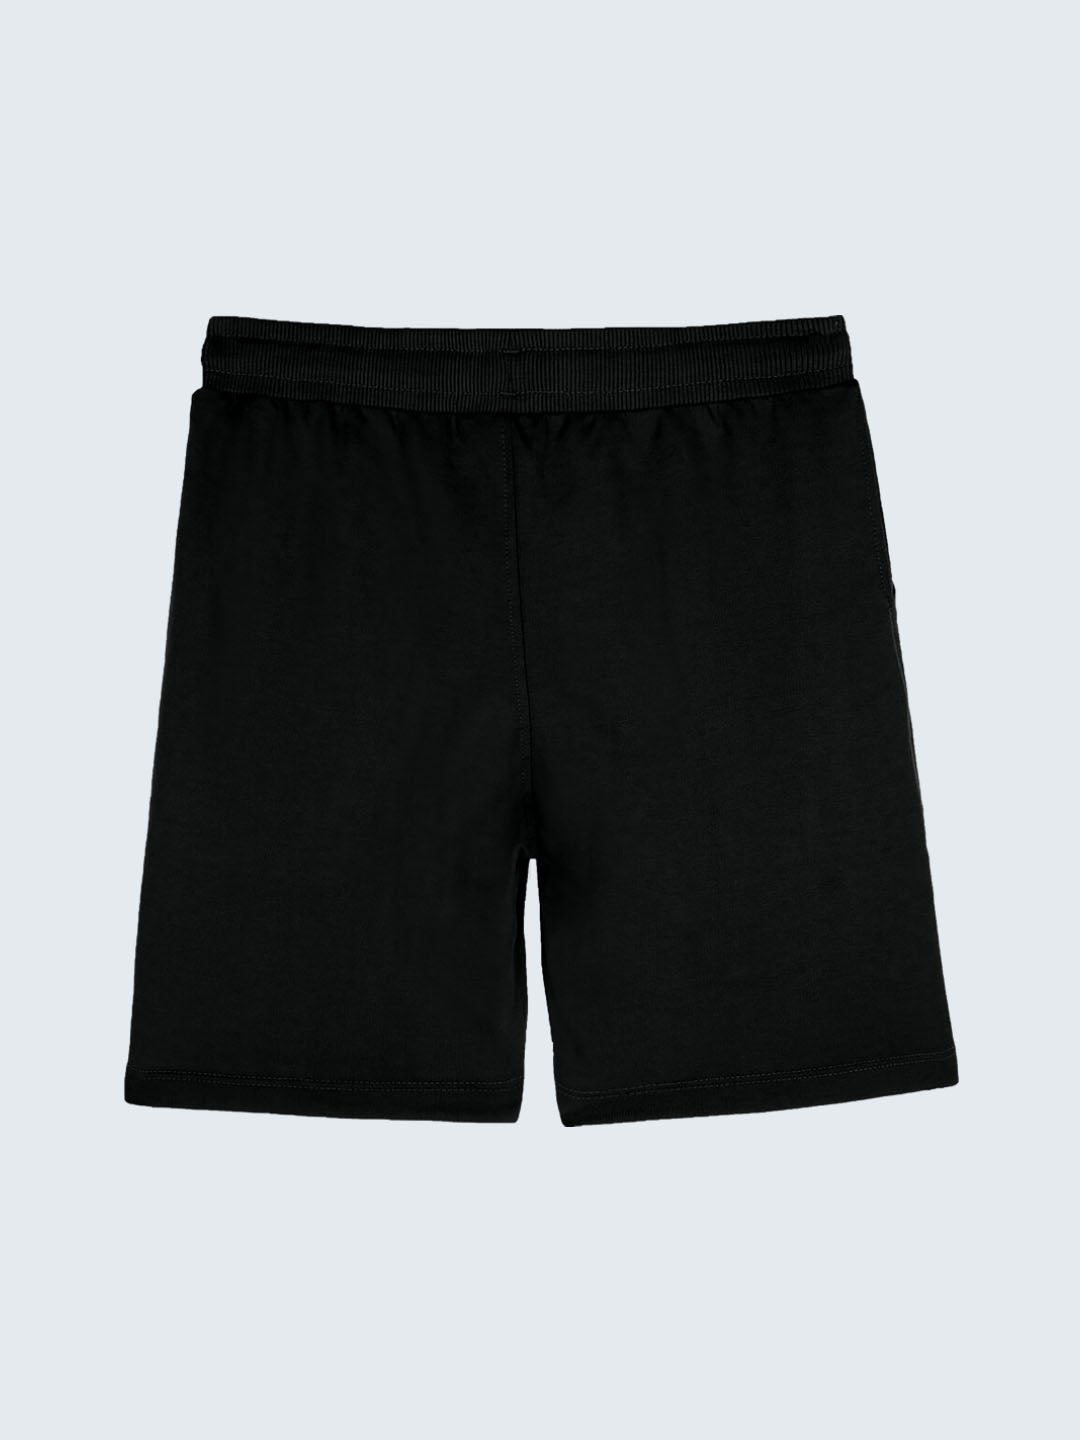 Kid's Active Shorts - Black (Front)